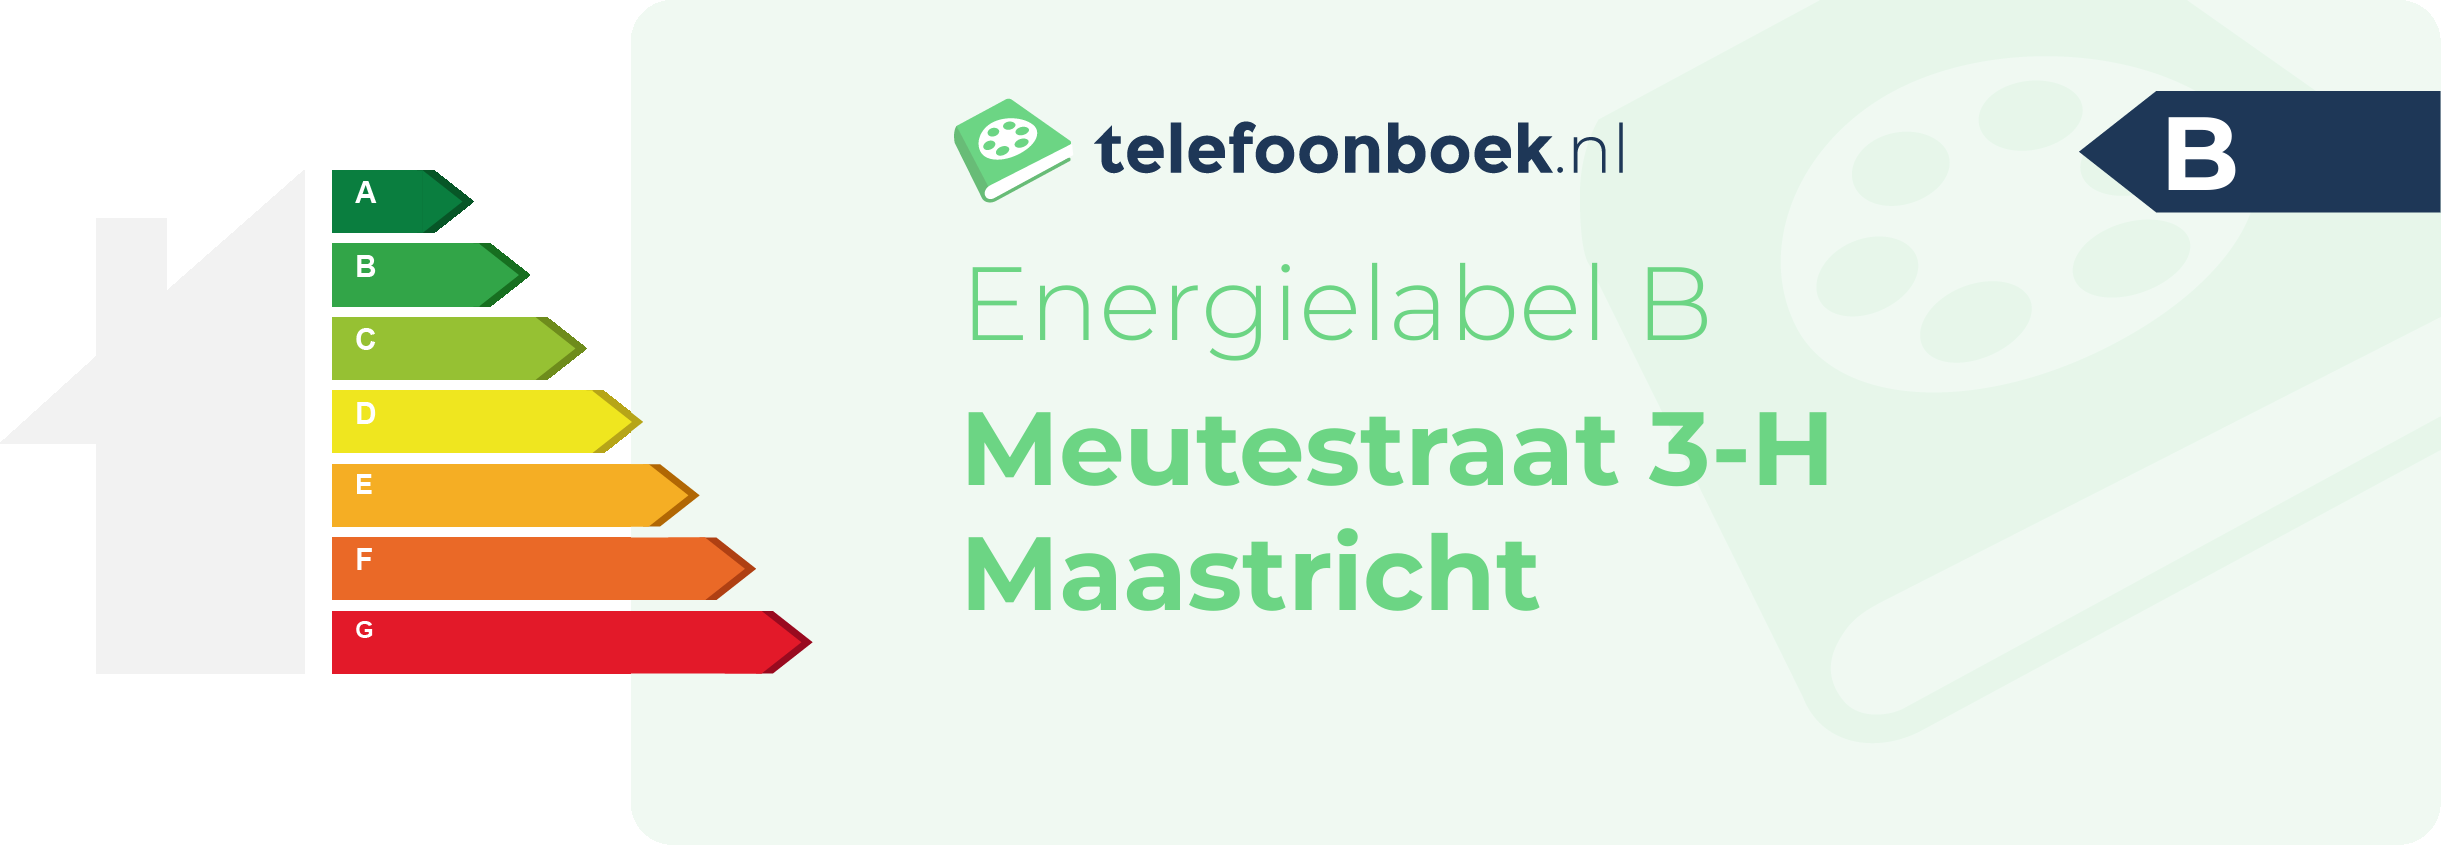 Energielabel Meutestraat 3-H Maastricht